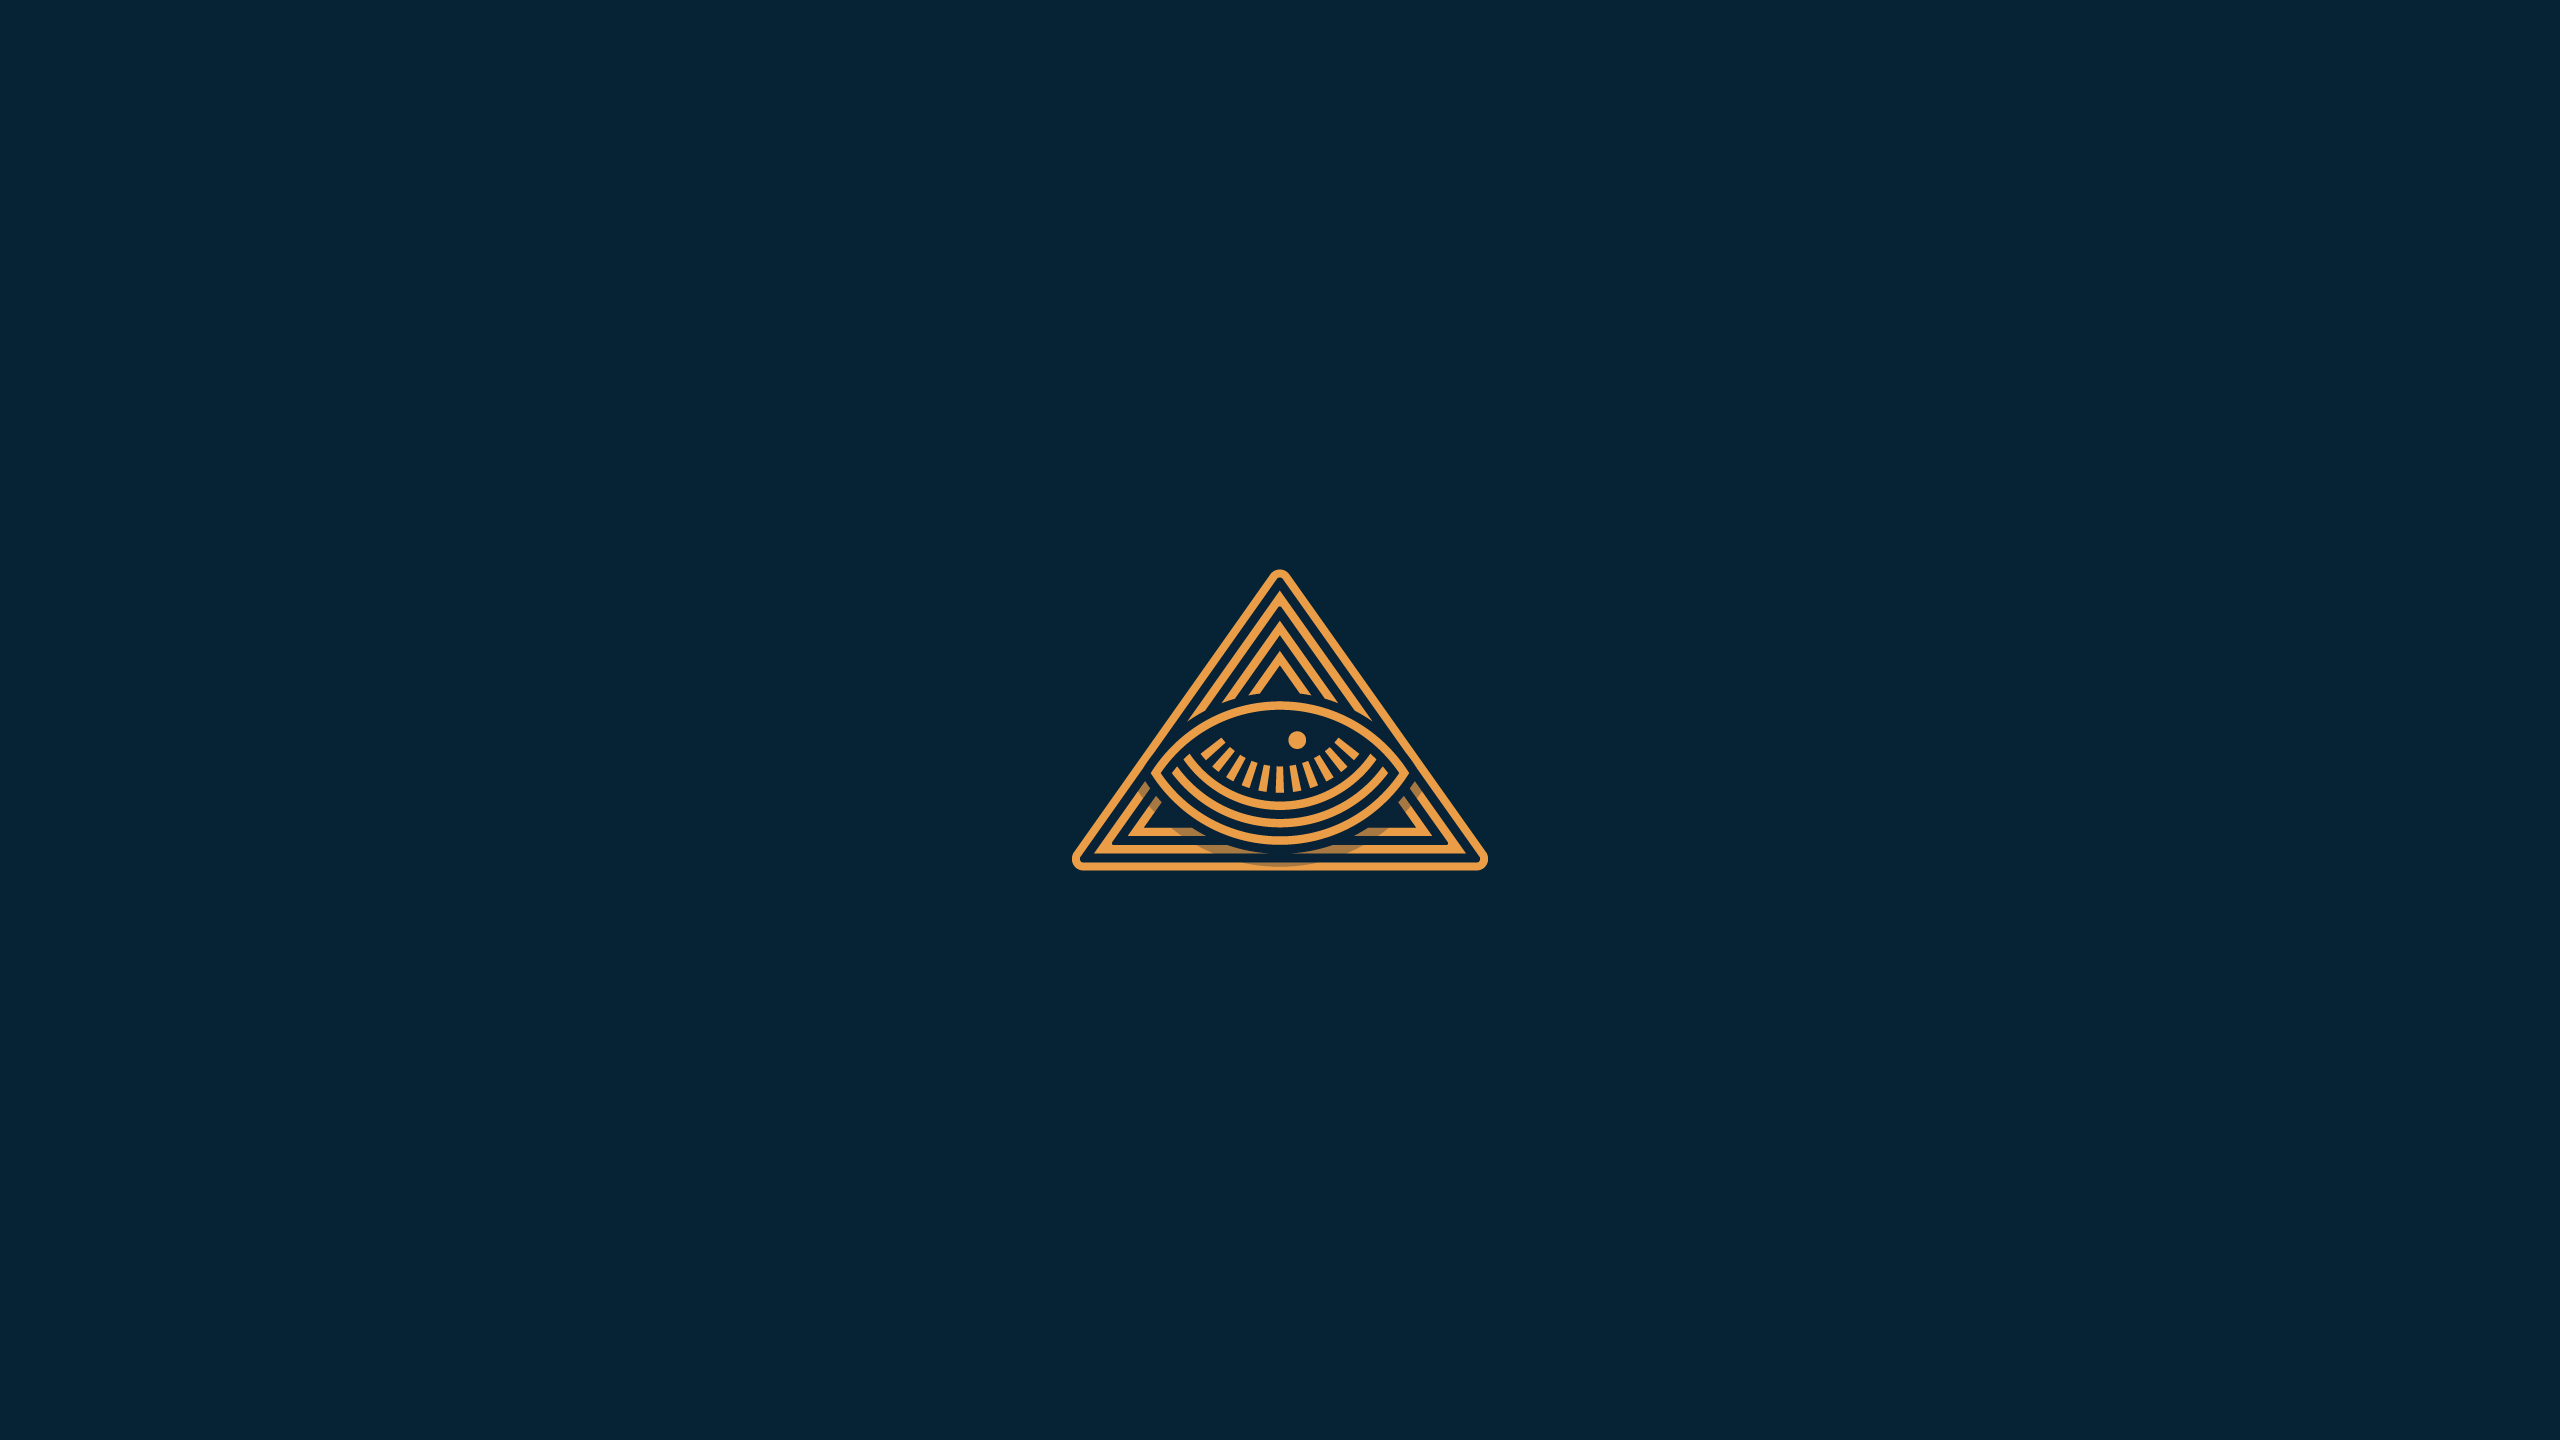 Graphic Design Illuminati Pyramid 2560x1440